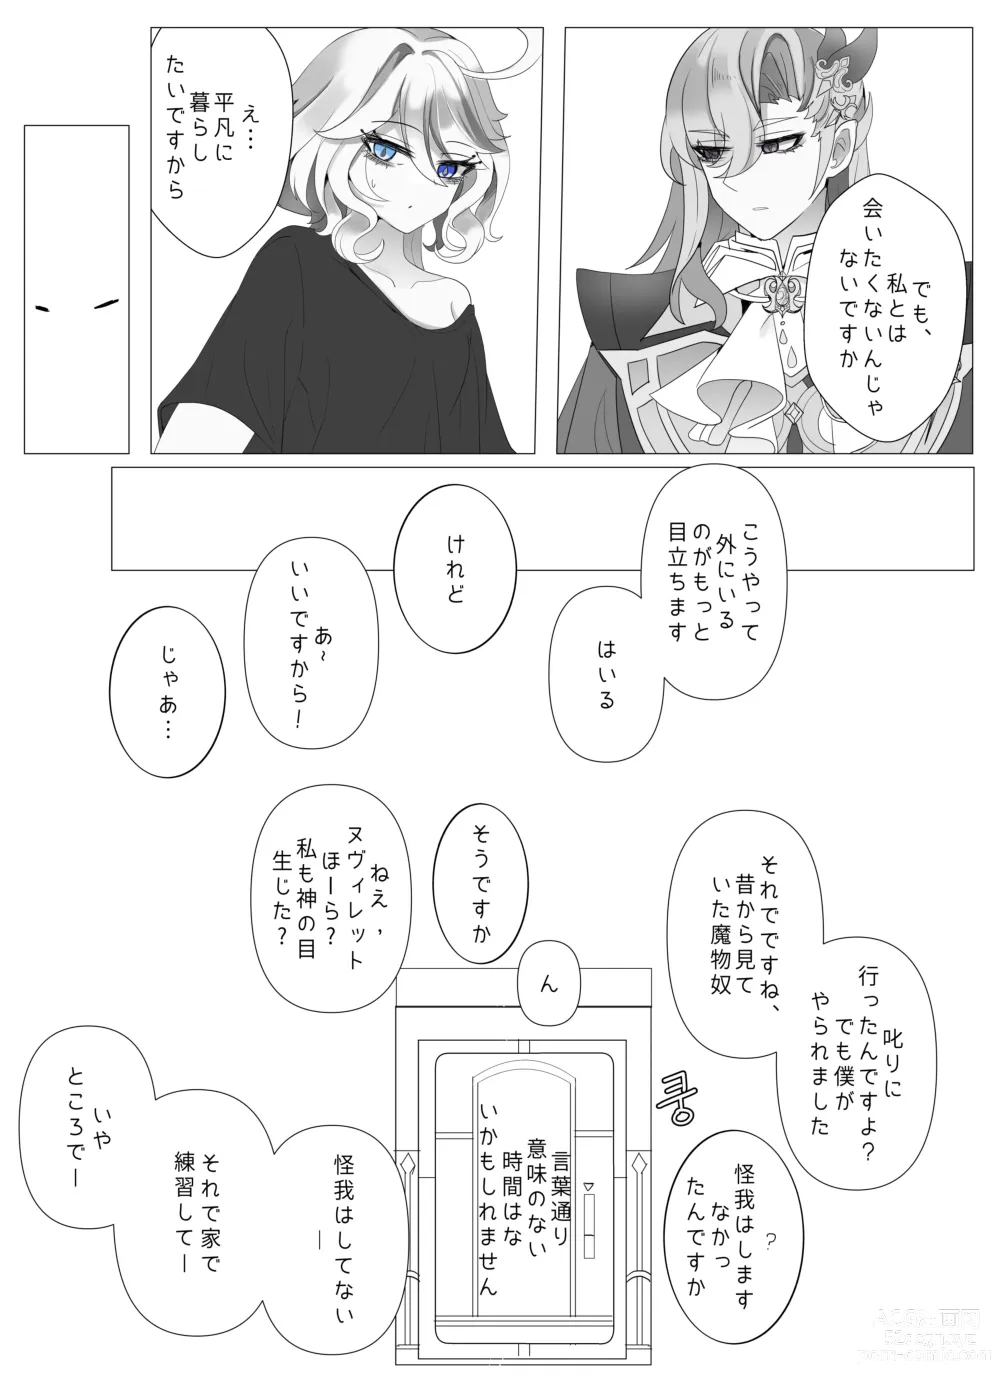 Page 42 of doujinshi Imi no Nai Jikan